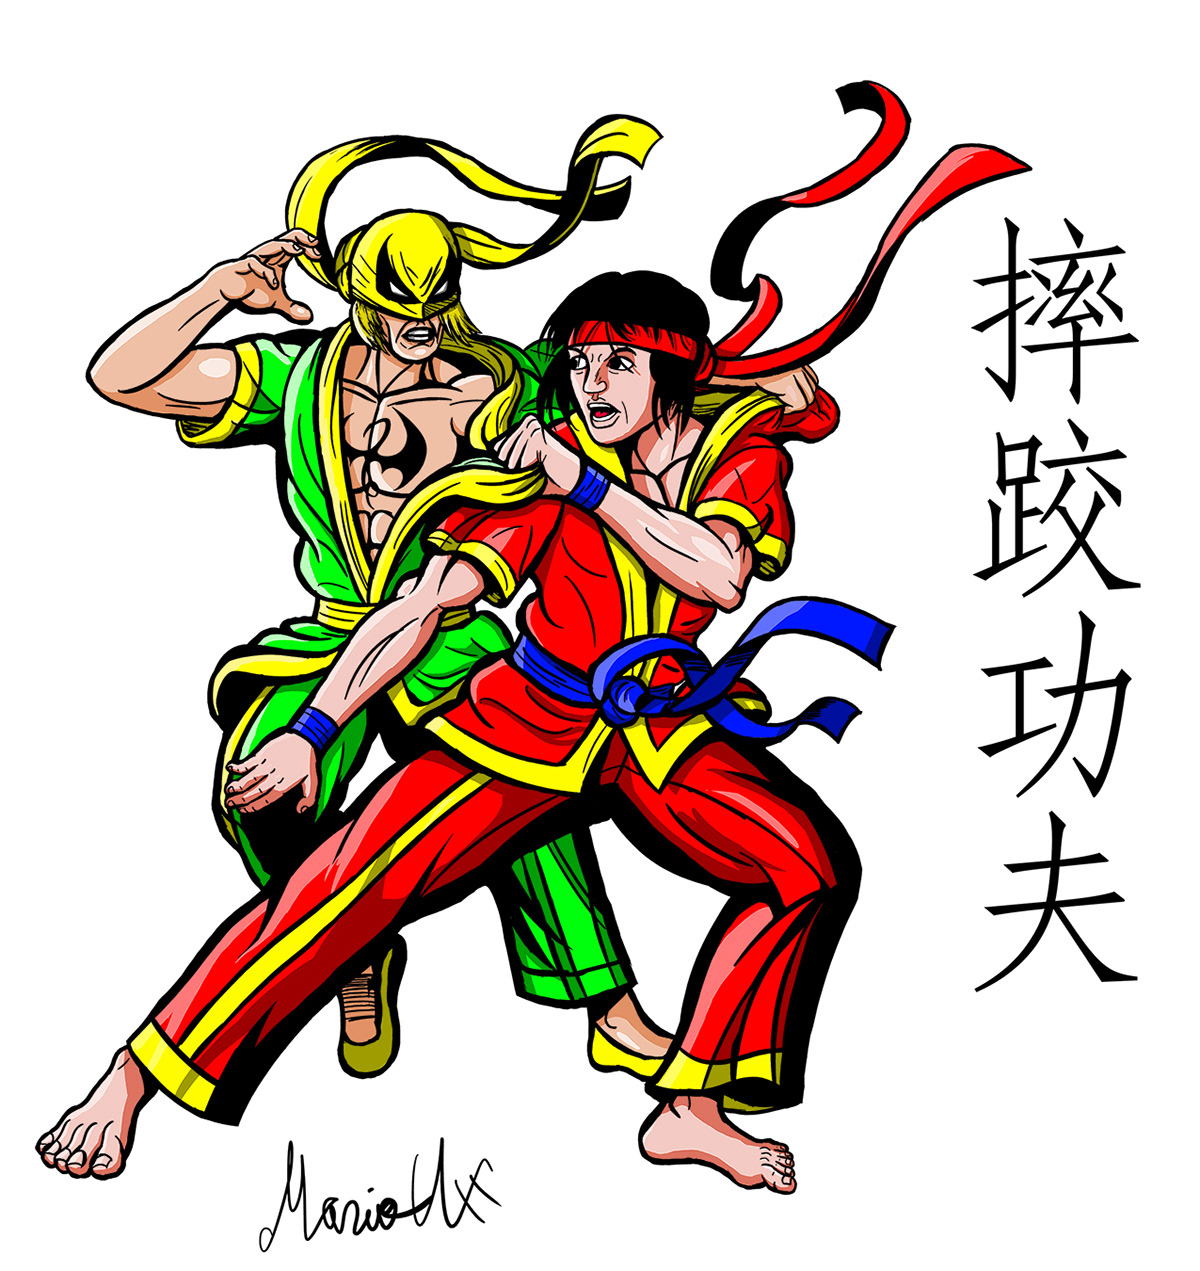 marvel comics iron fist Danny Rand kung fu shuai jiao shang chi Wrestling Martial Arts superheroes shuai chiao